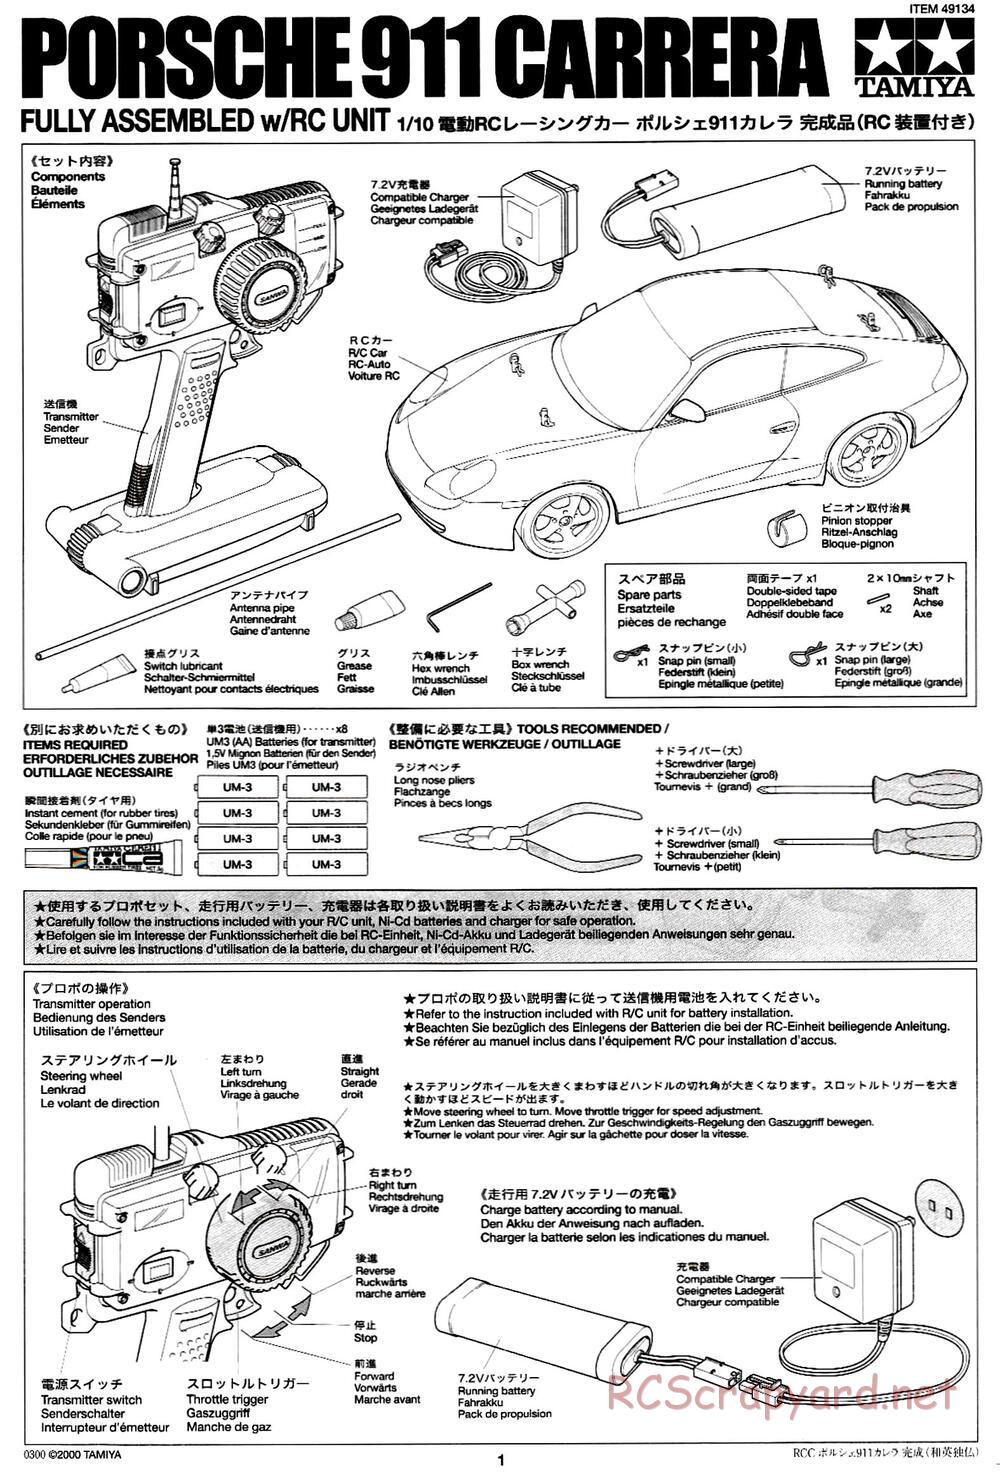 Tamiya - Porsche 911 Carrera - M-04L - Manual - Page 1